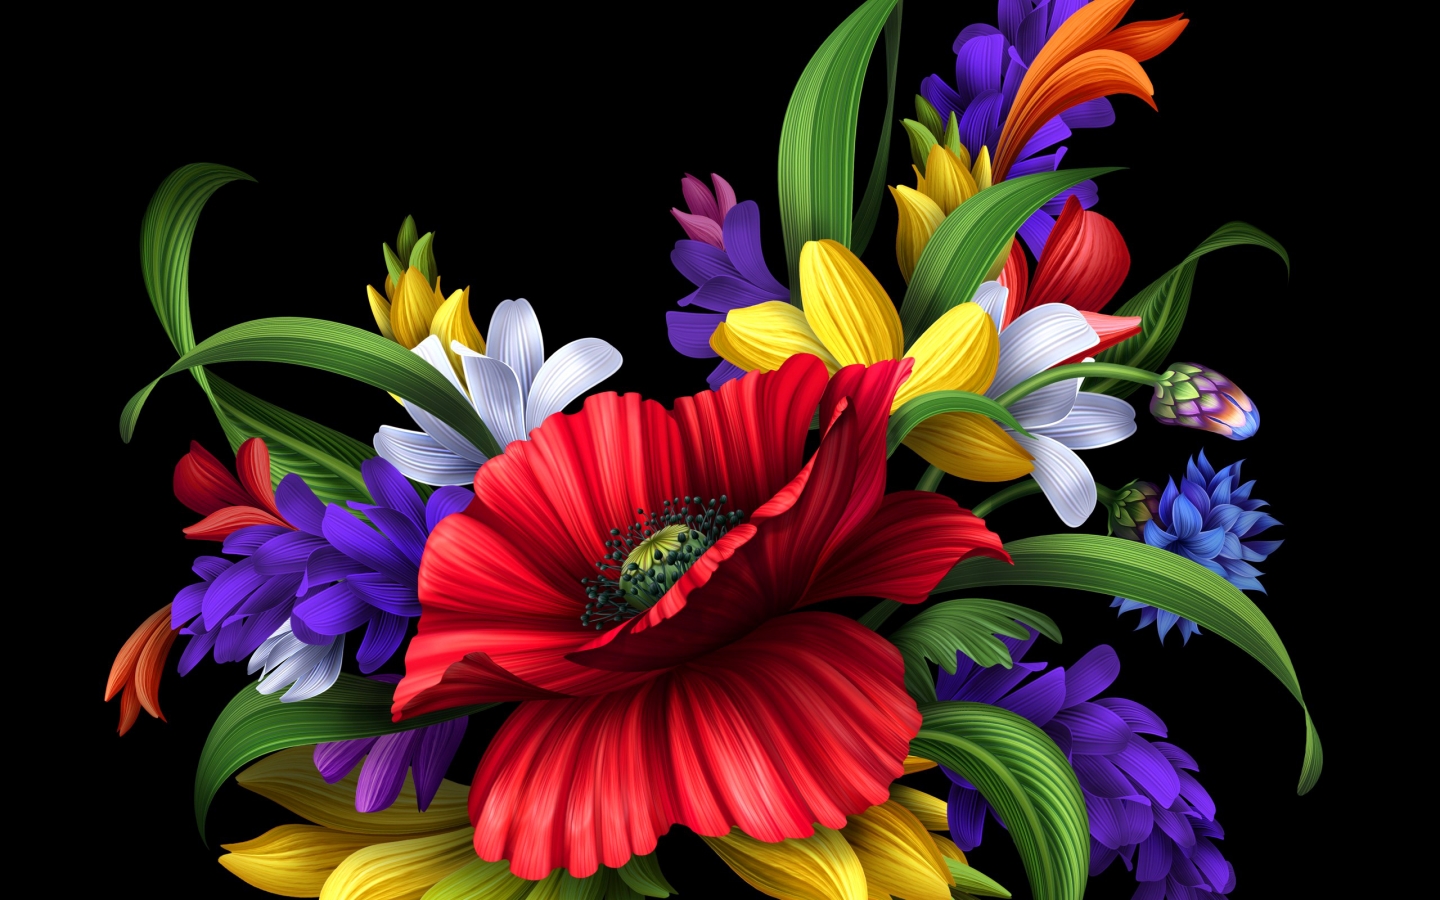 Special Flower Bouquet for 1440 x 900 widescreen resolution